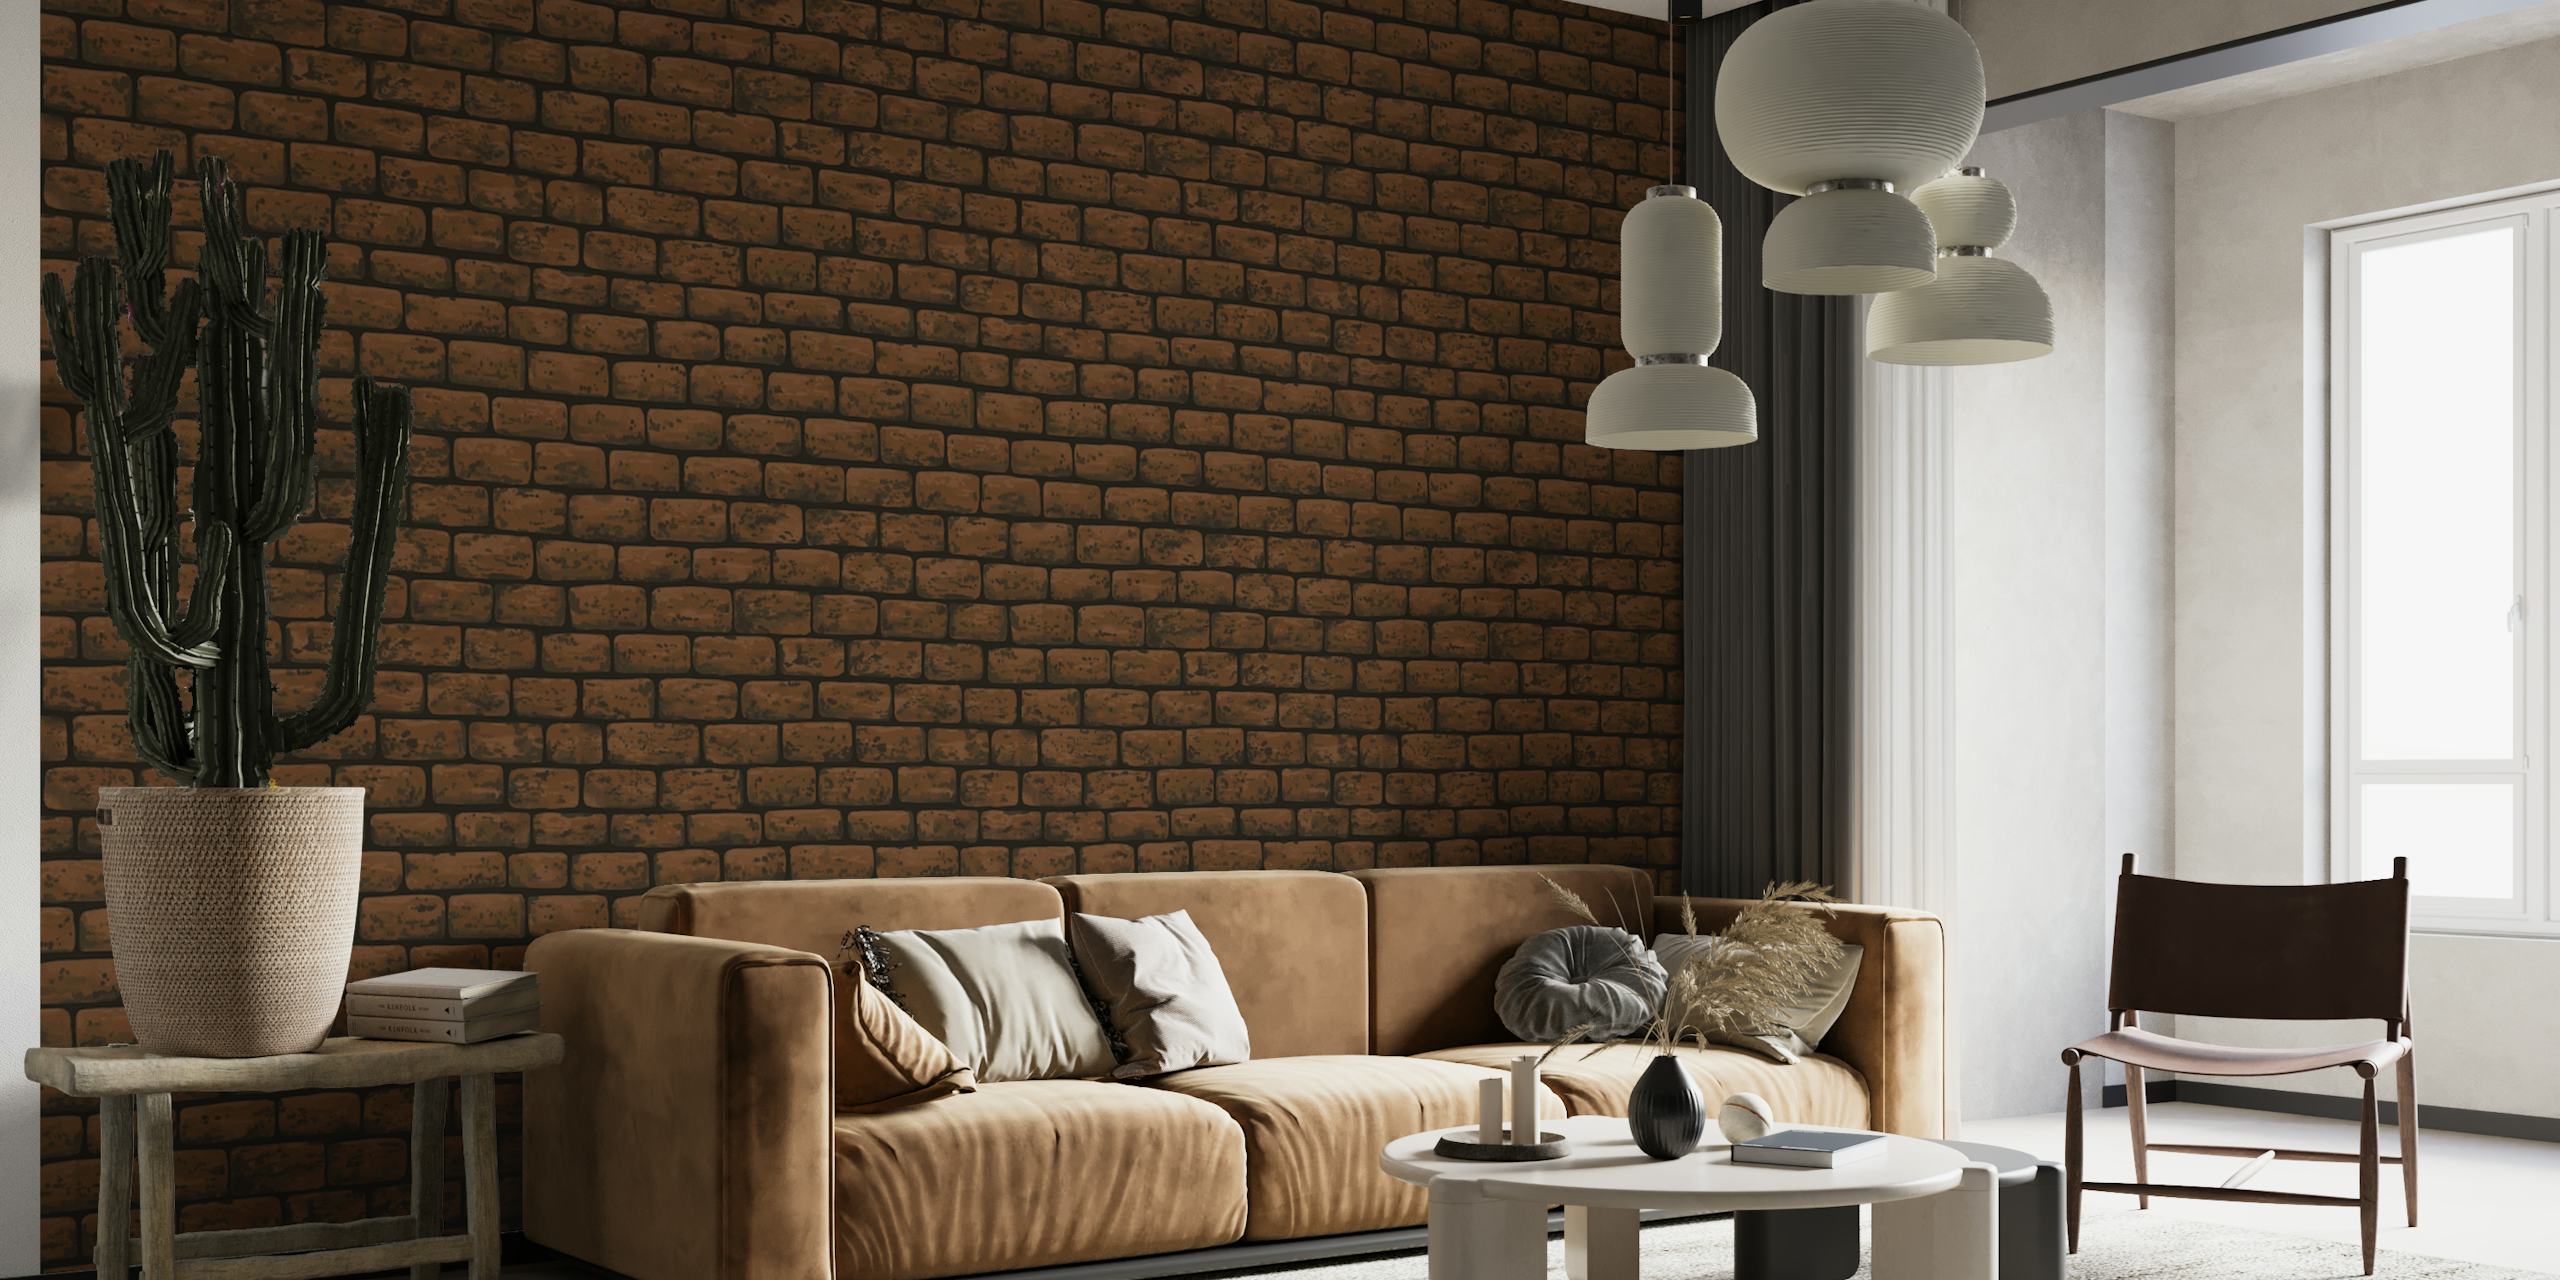 Fotomural de pared de ladrillo marrón texturizado para un aspecto interior rústico e industrial